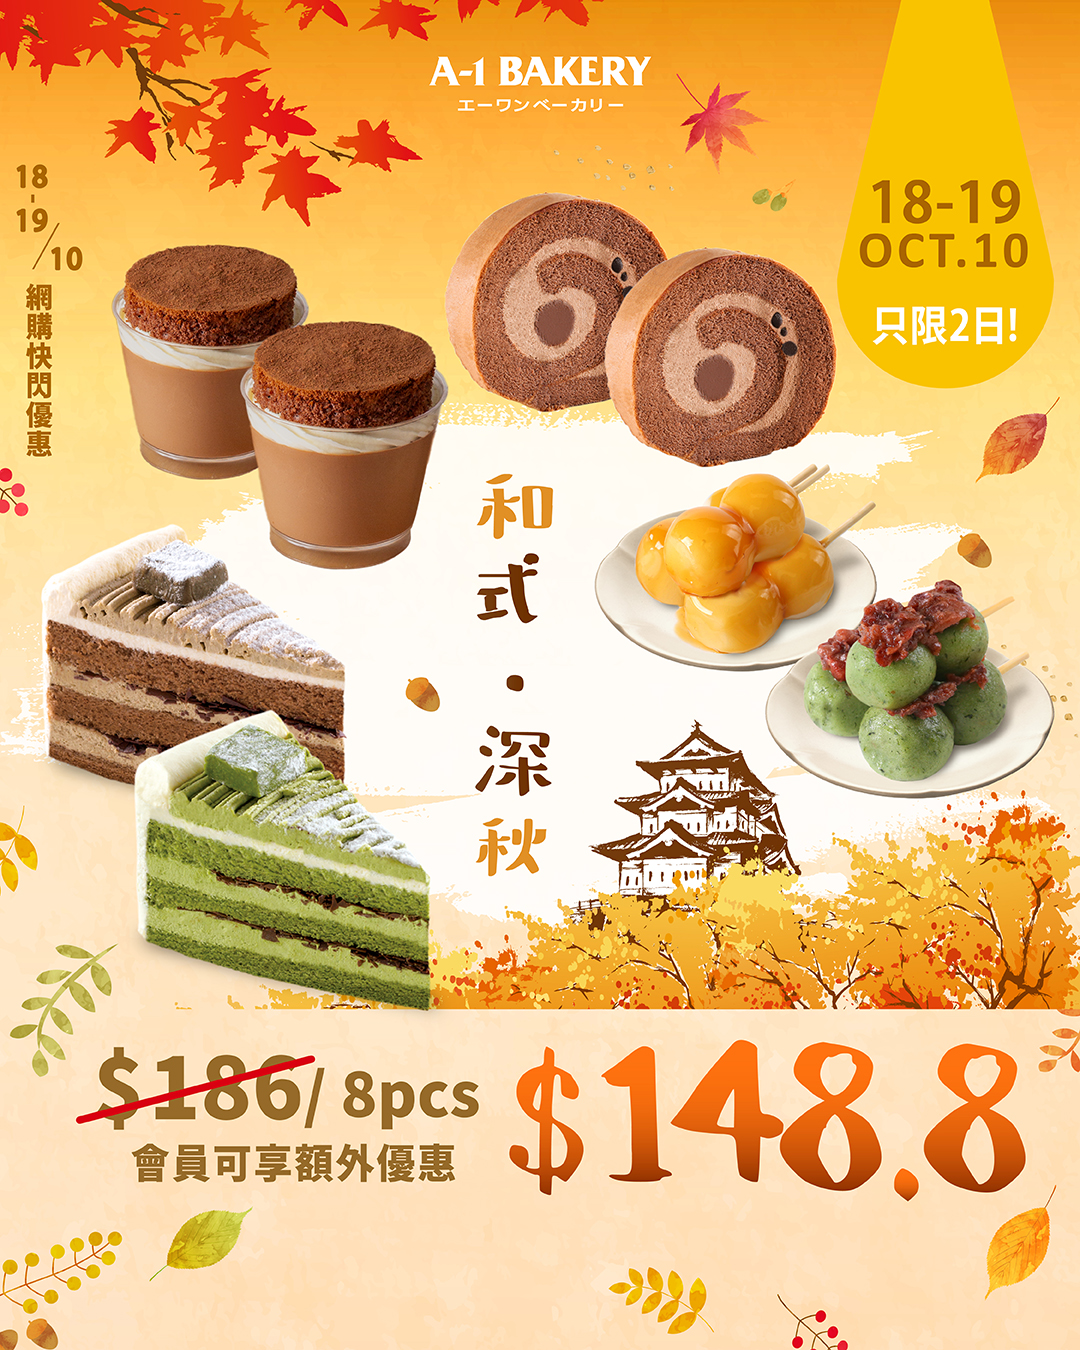 A-1 Bakery Japanese Style·Late Autumn Dessert Set Online Shopping Flash Sale